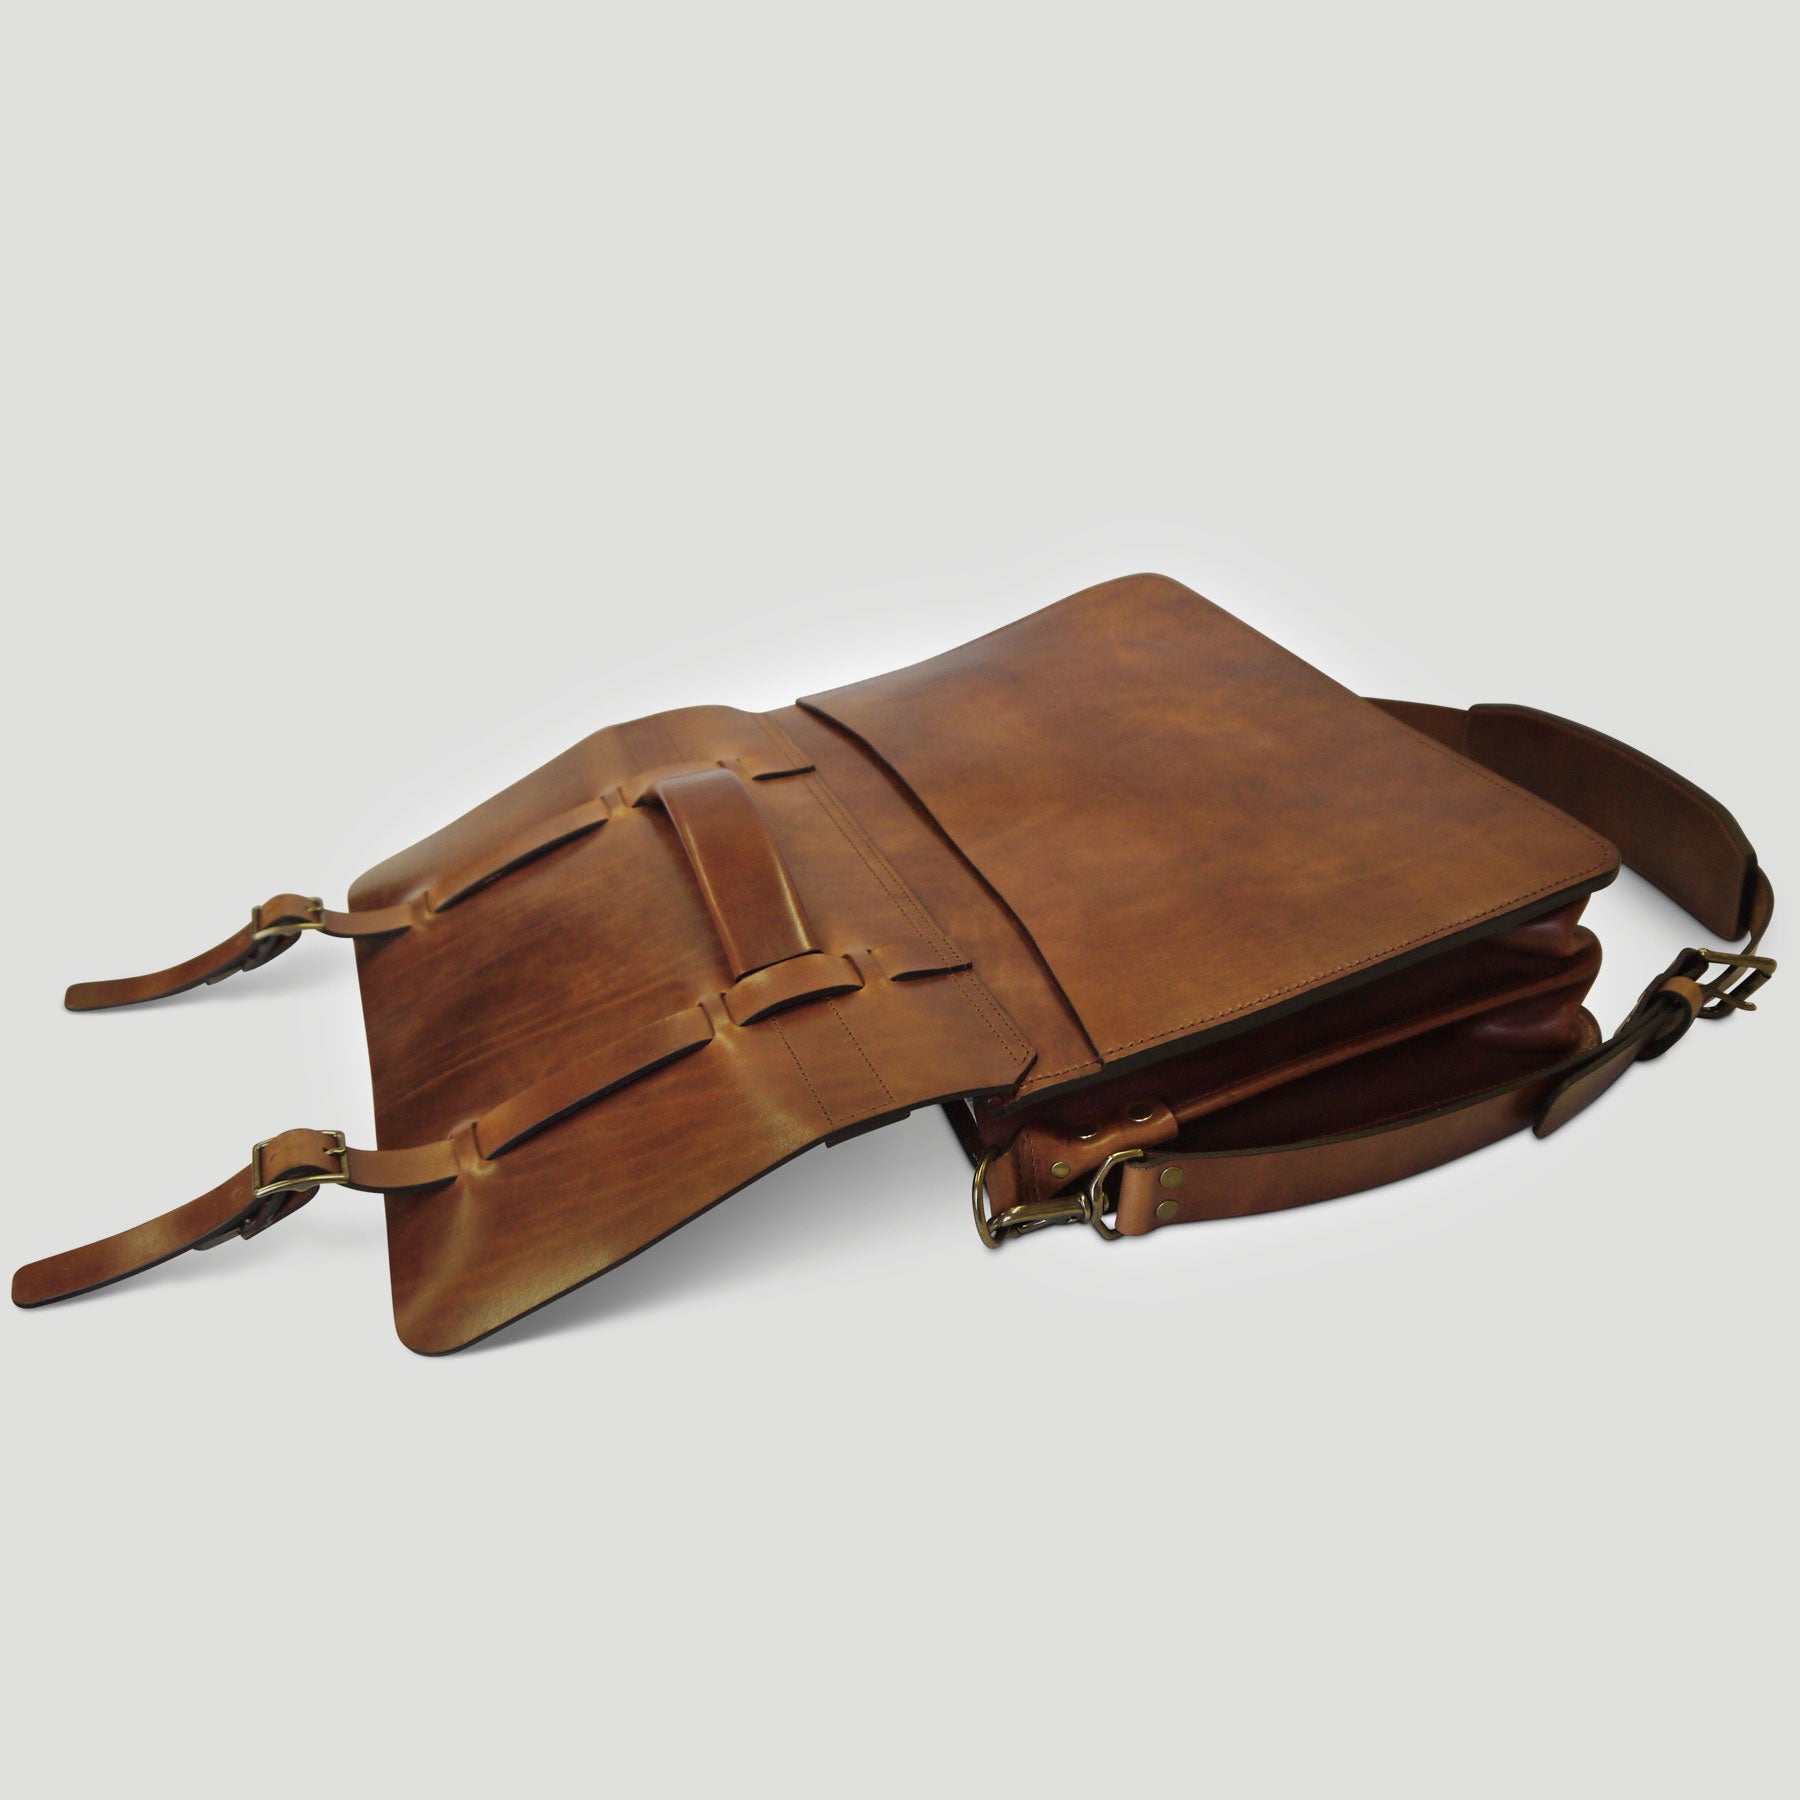 BCHS Vintage Messenger Bag by BASKETCASE GALLERY